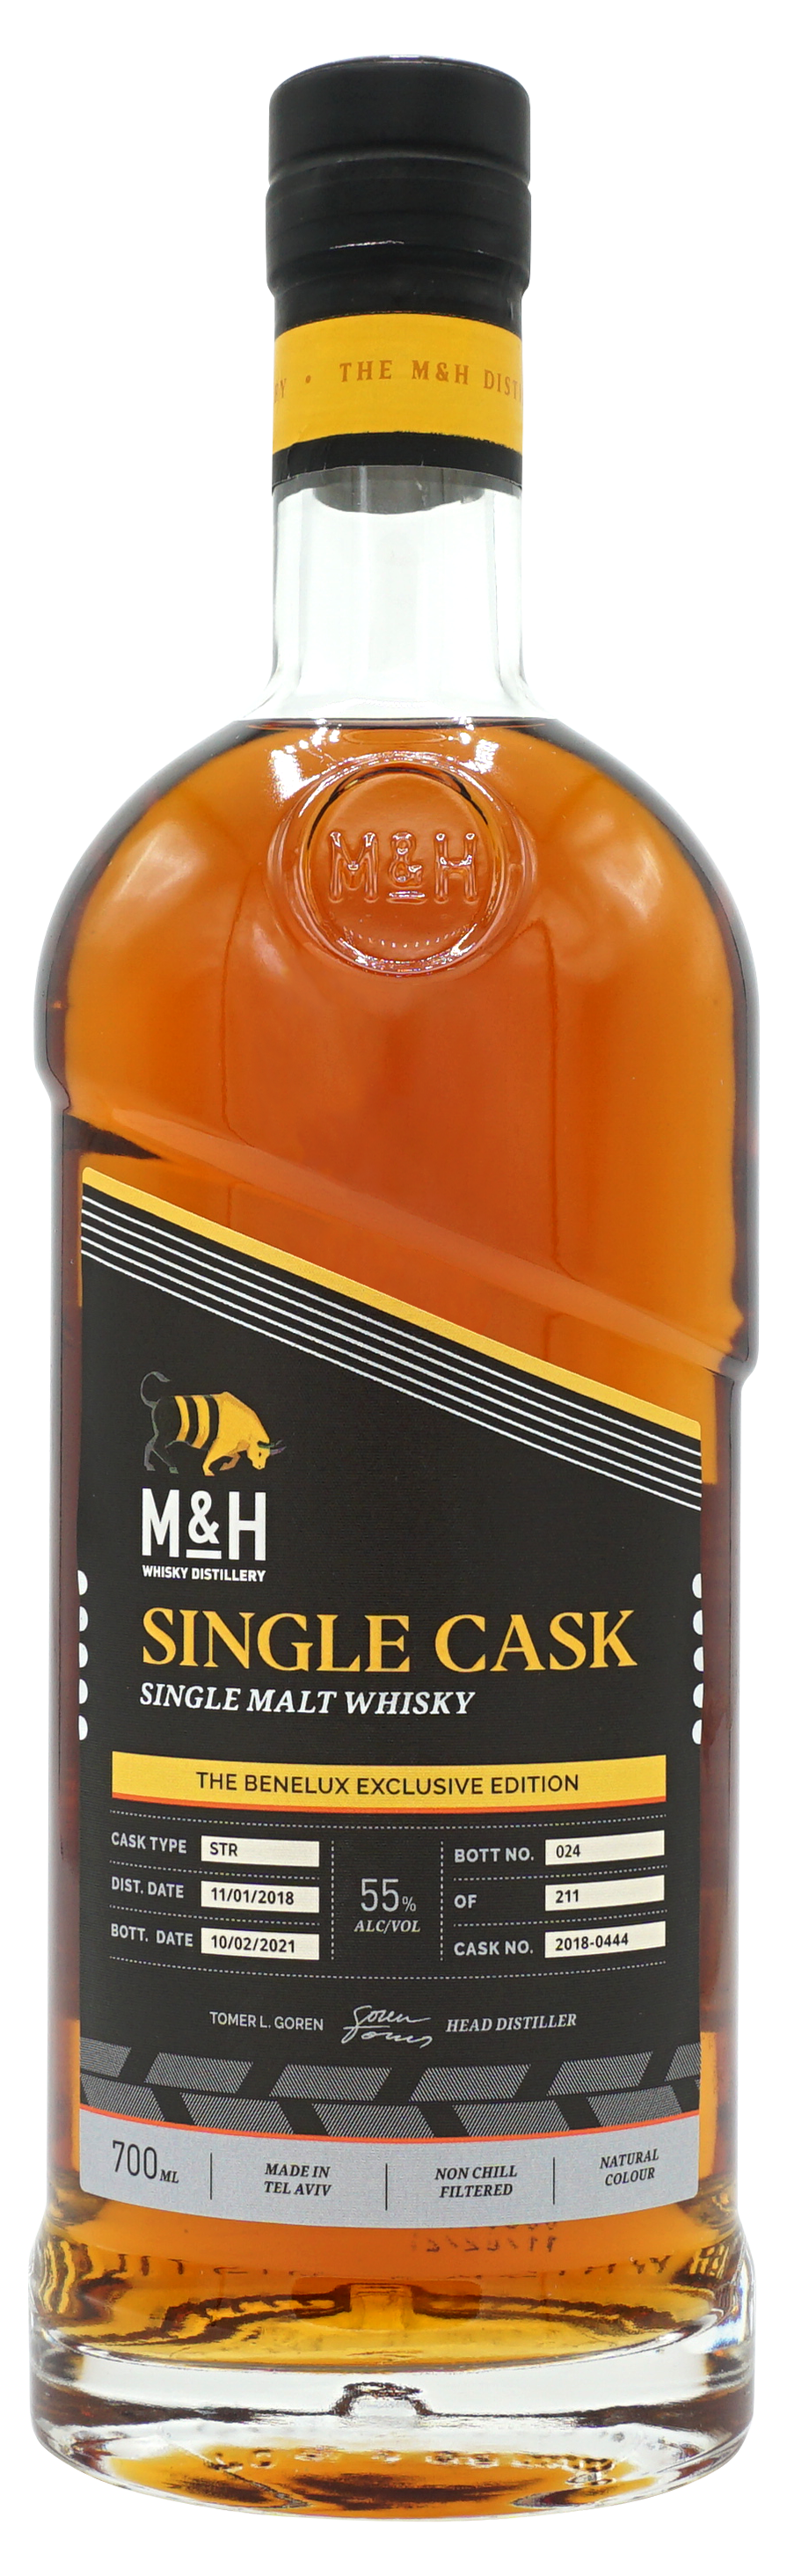 Mh Single Cask Benelux 2018 0848 Single Malt 70cl 55